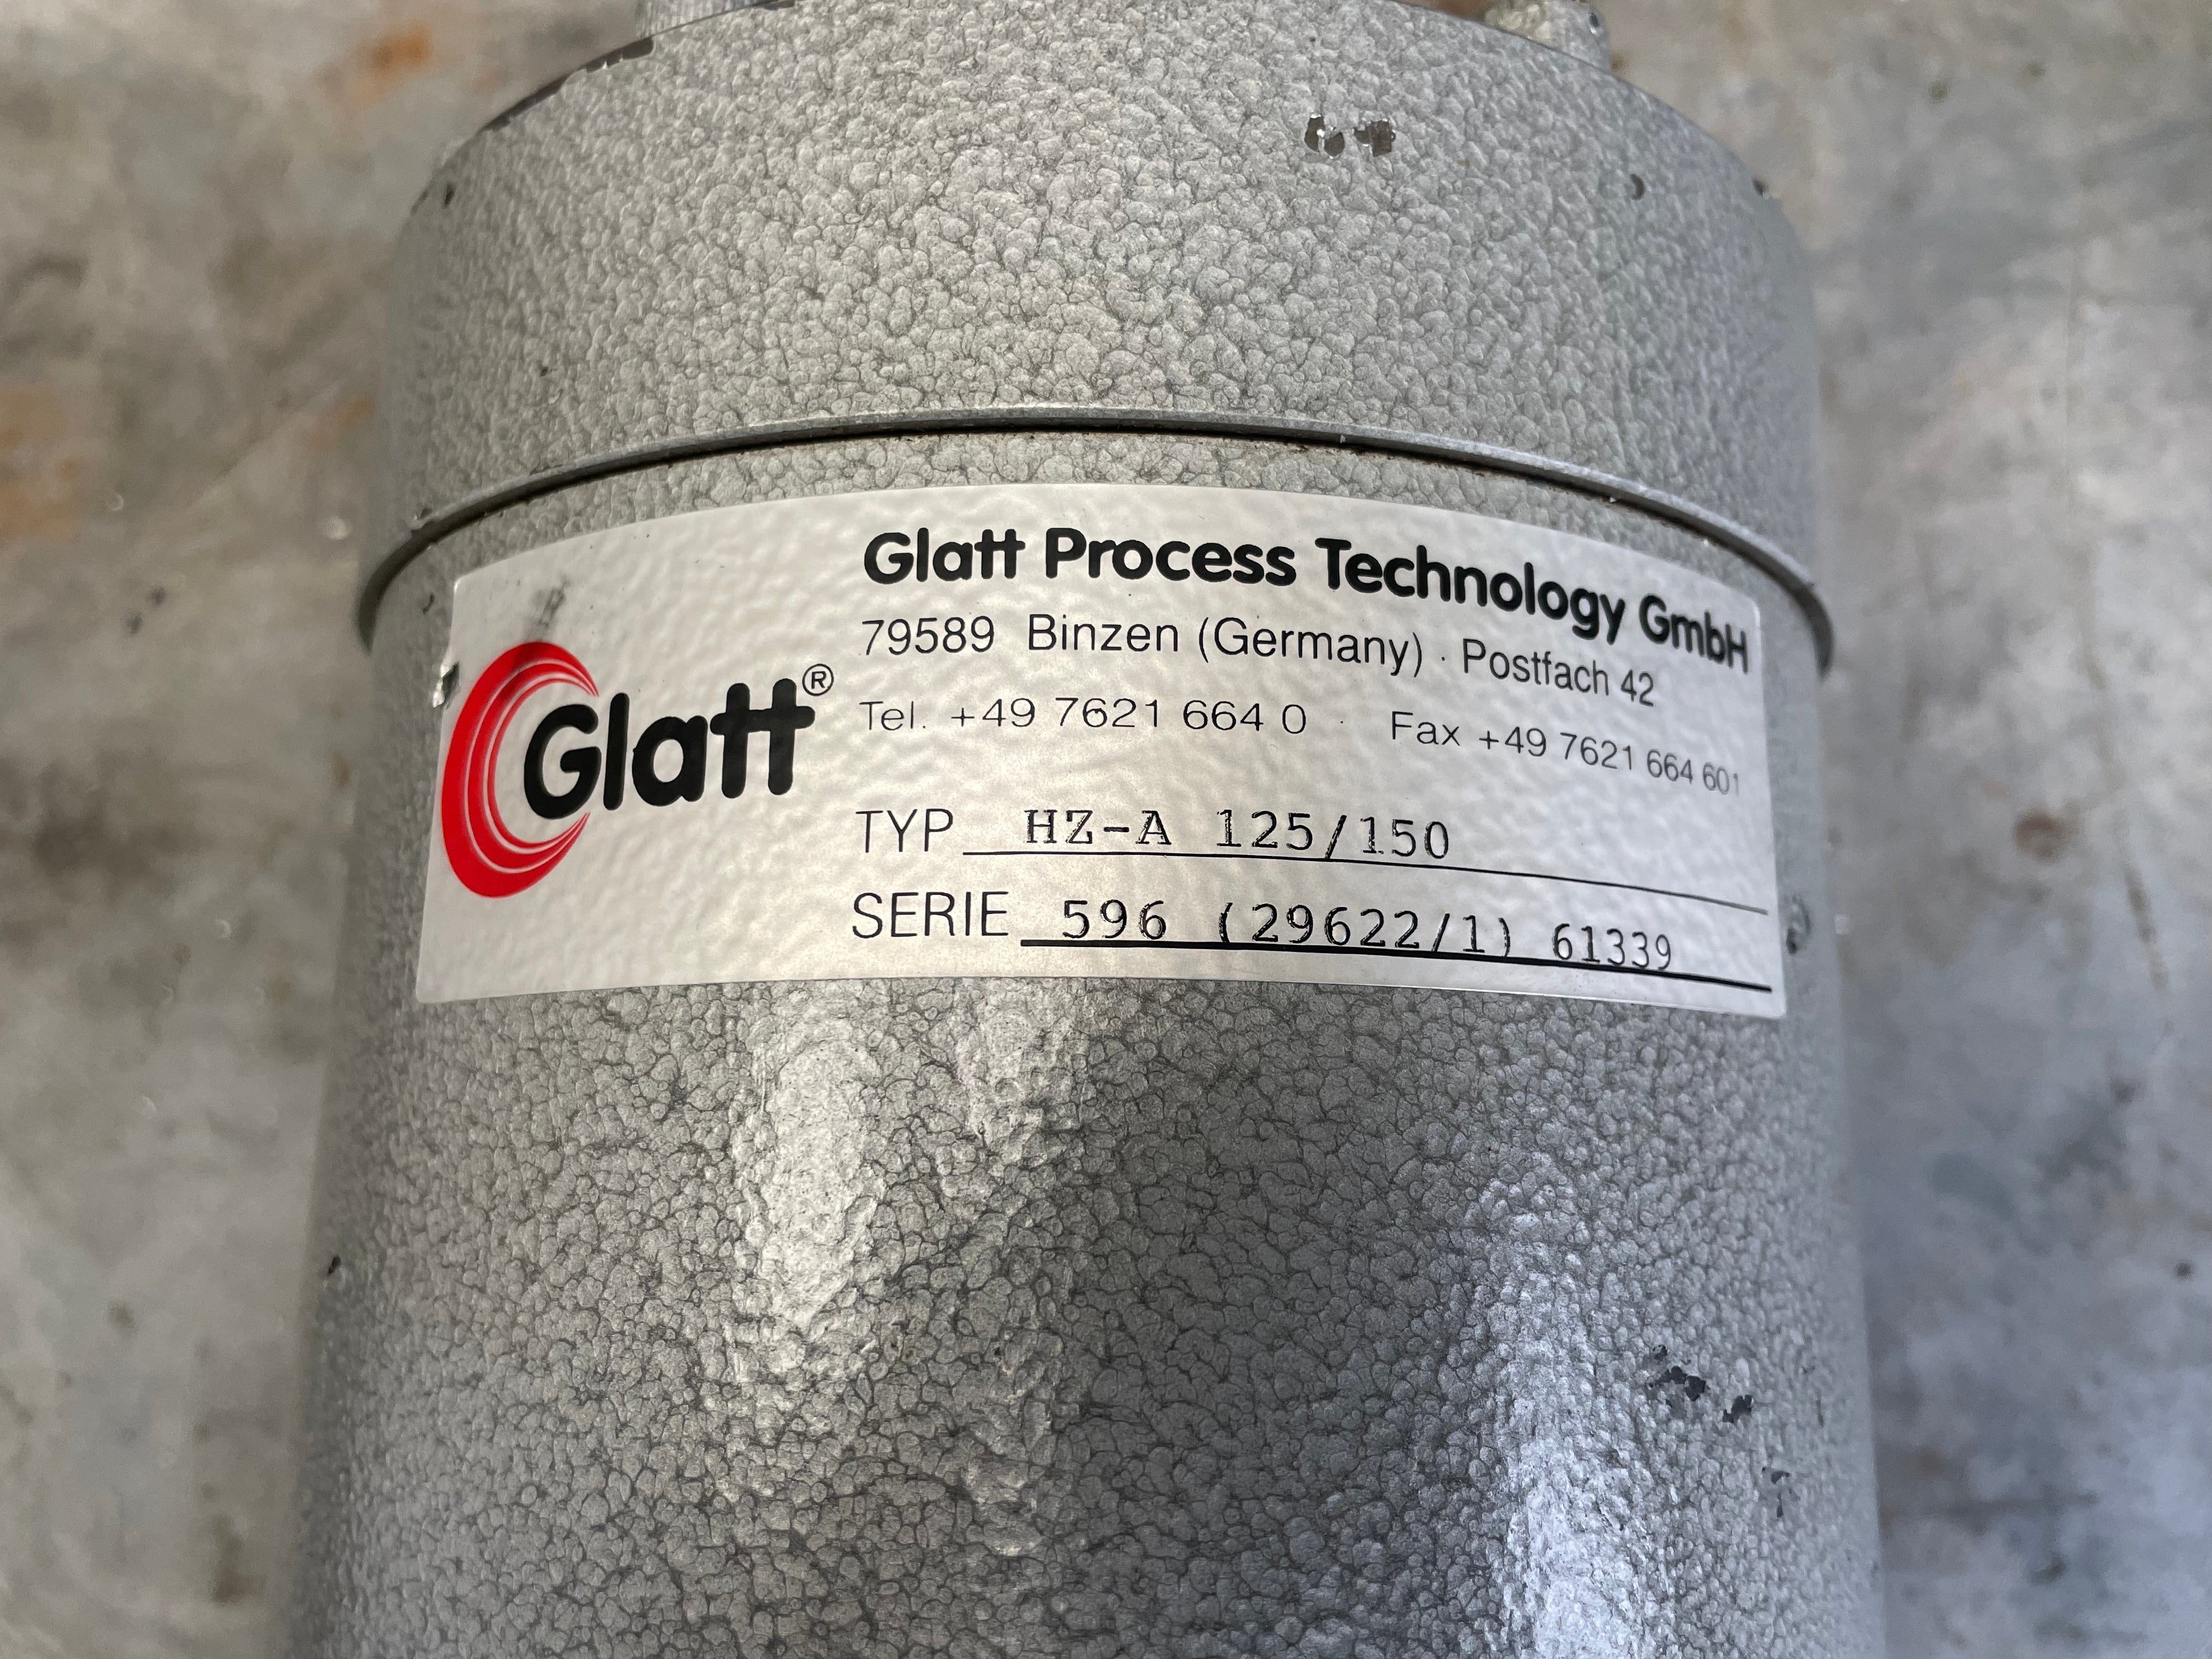 Lift Cylinder for Glatt GPCG 200 (HZ-A 125/150)